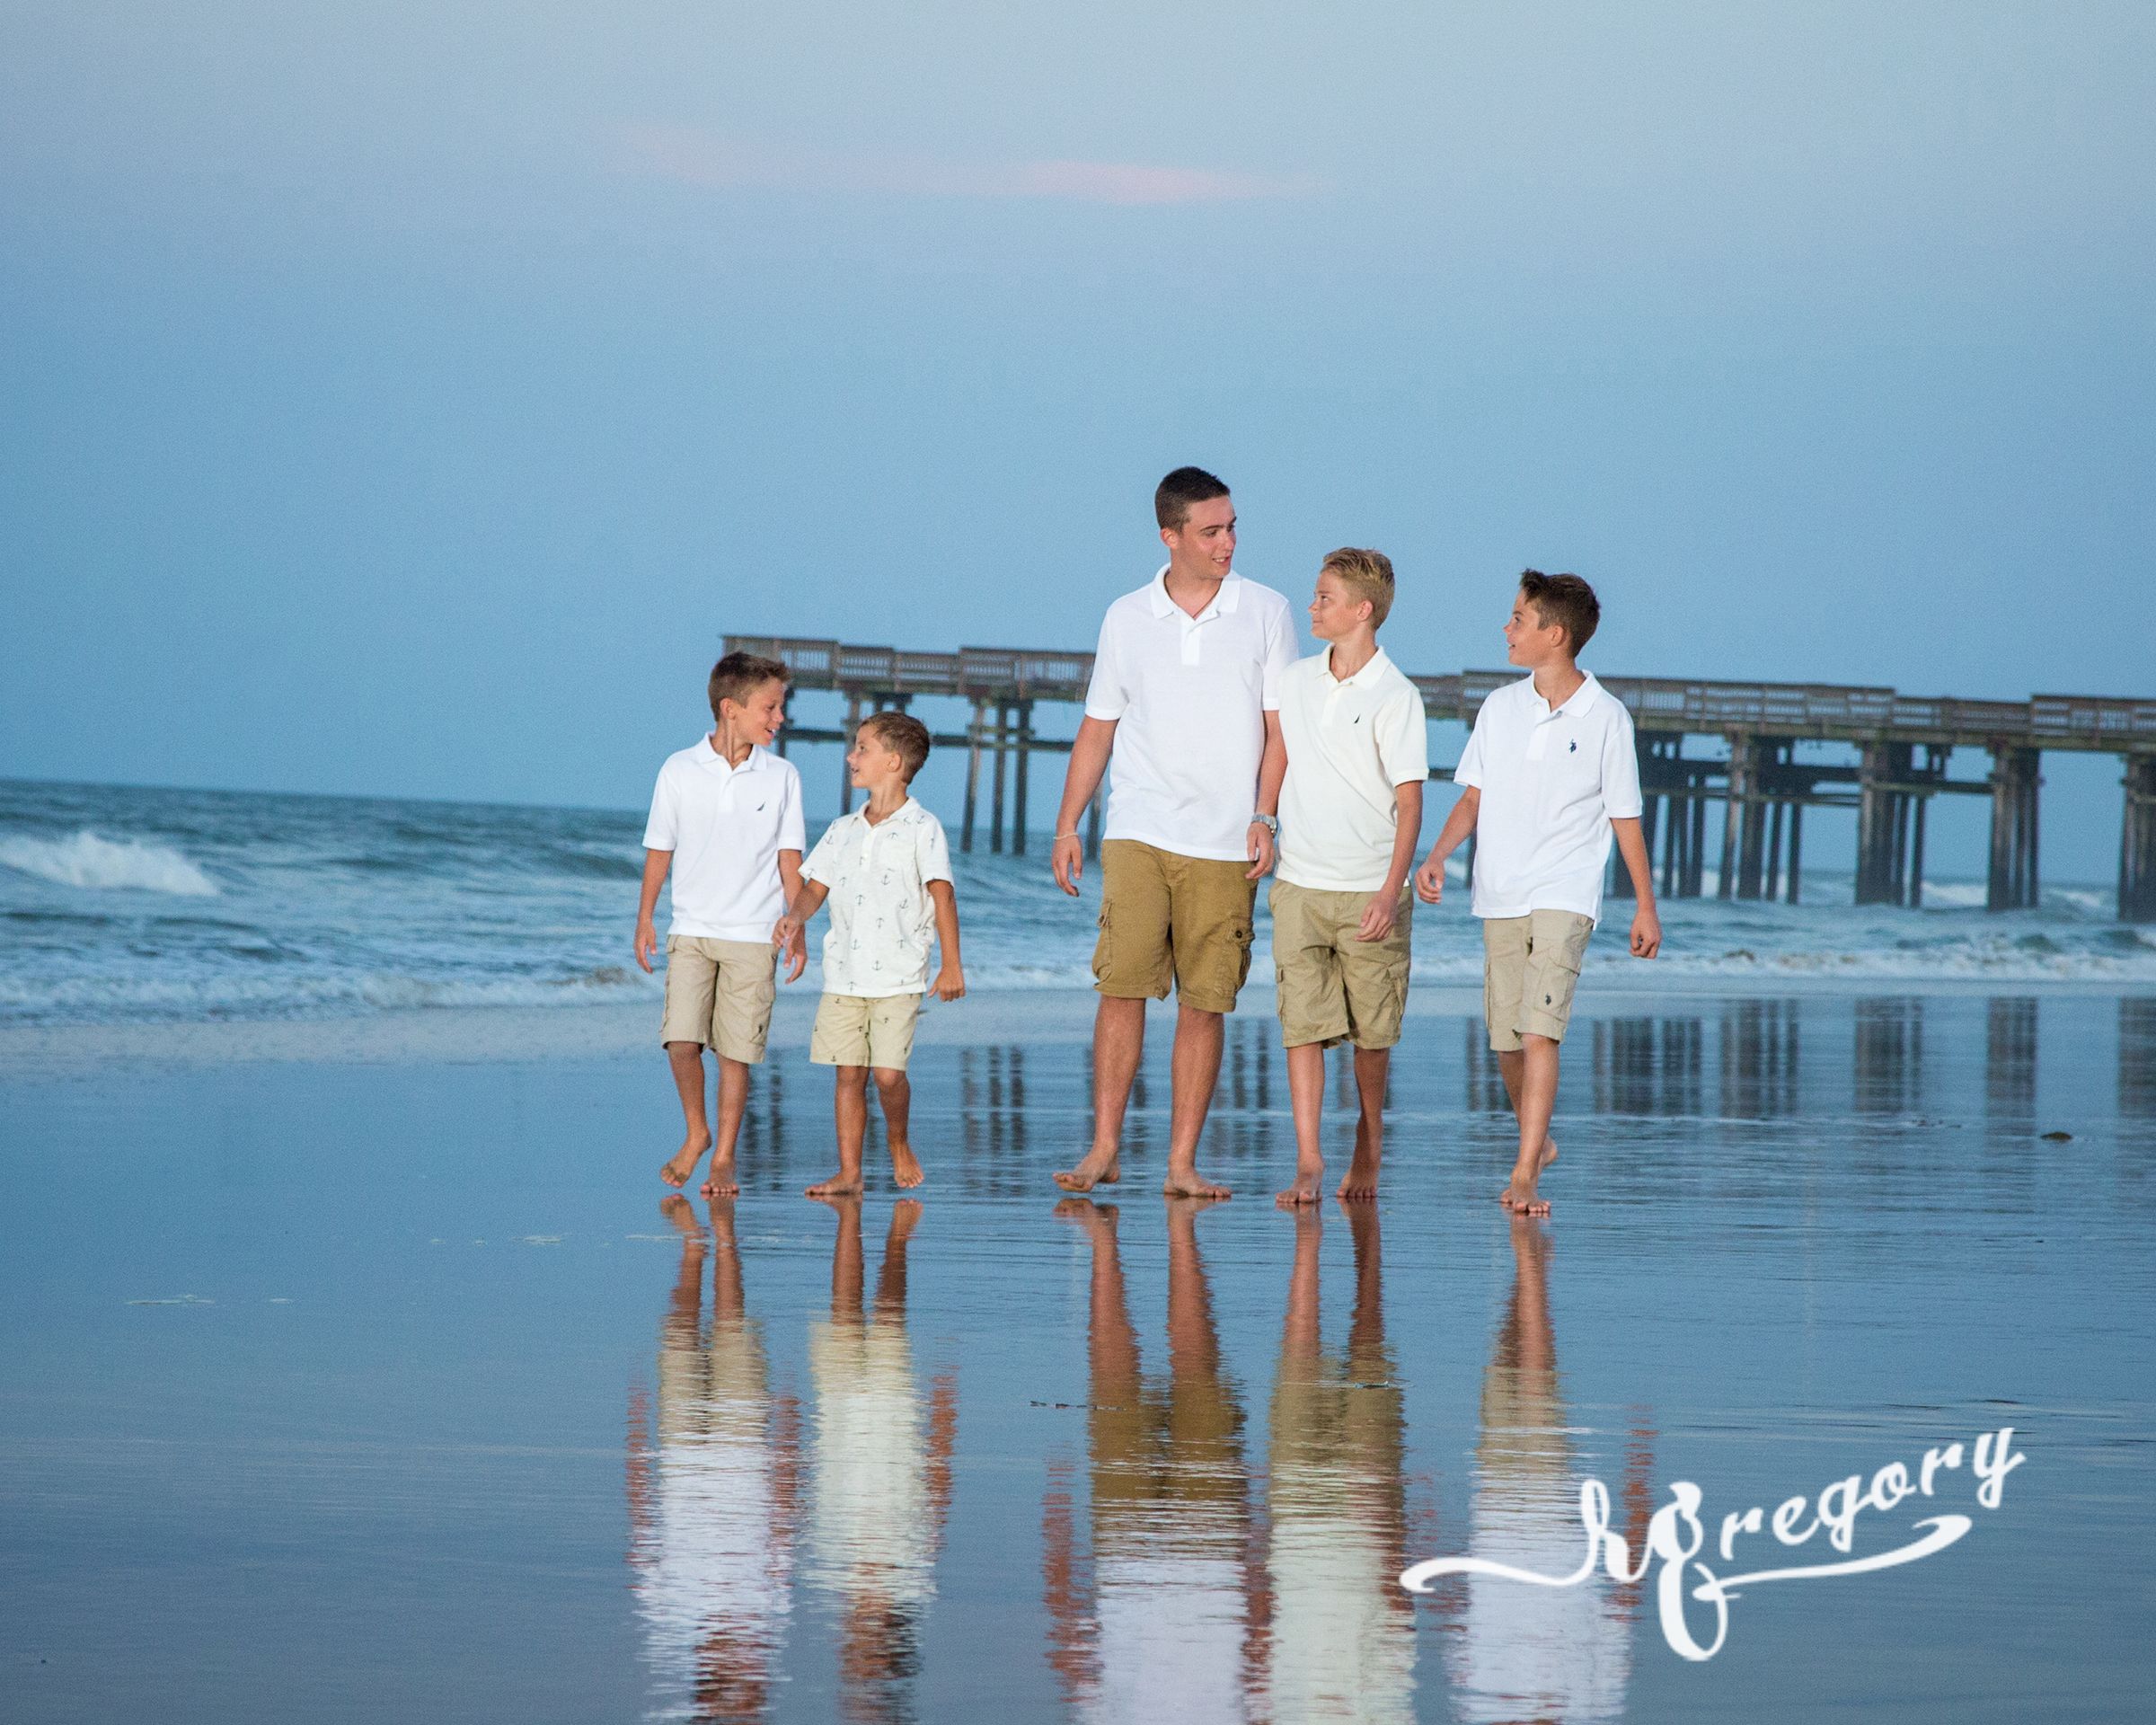 Replogle family children photo reflection on wet beach